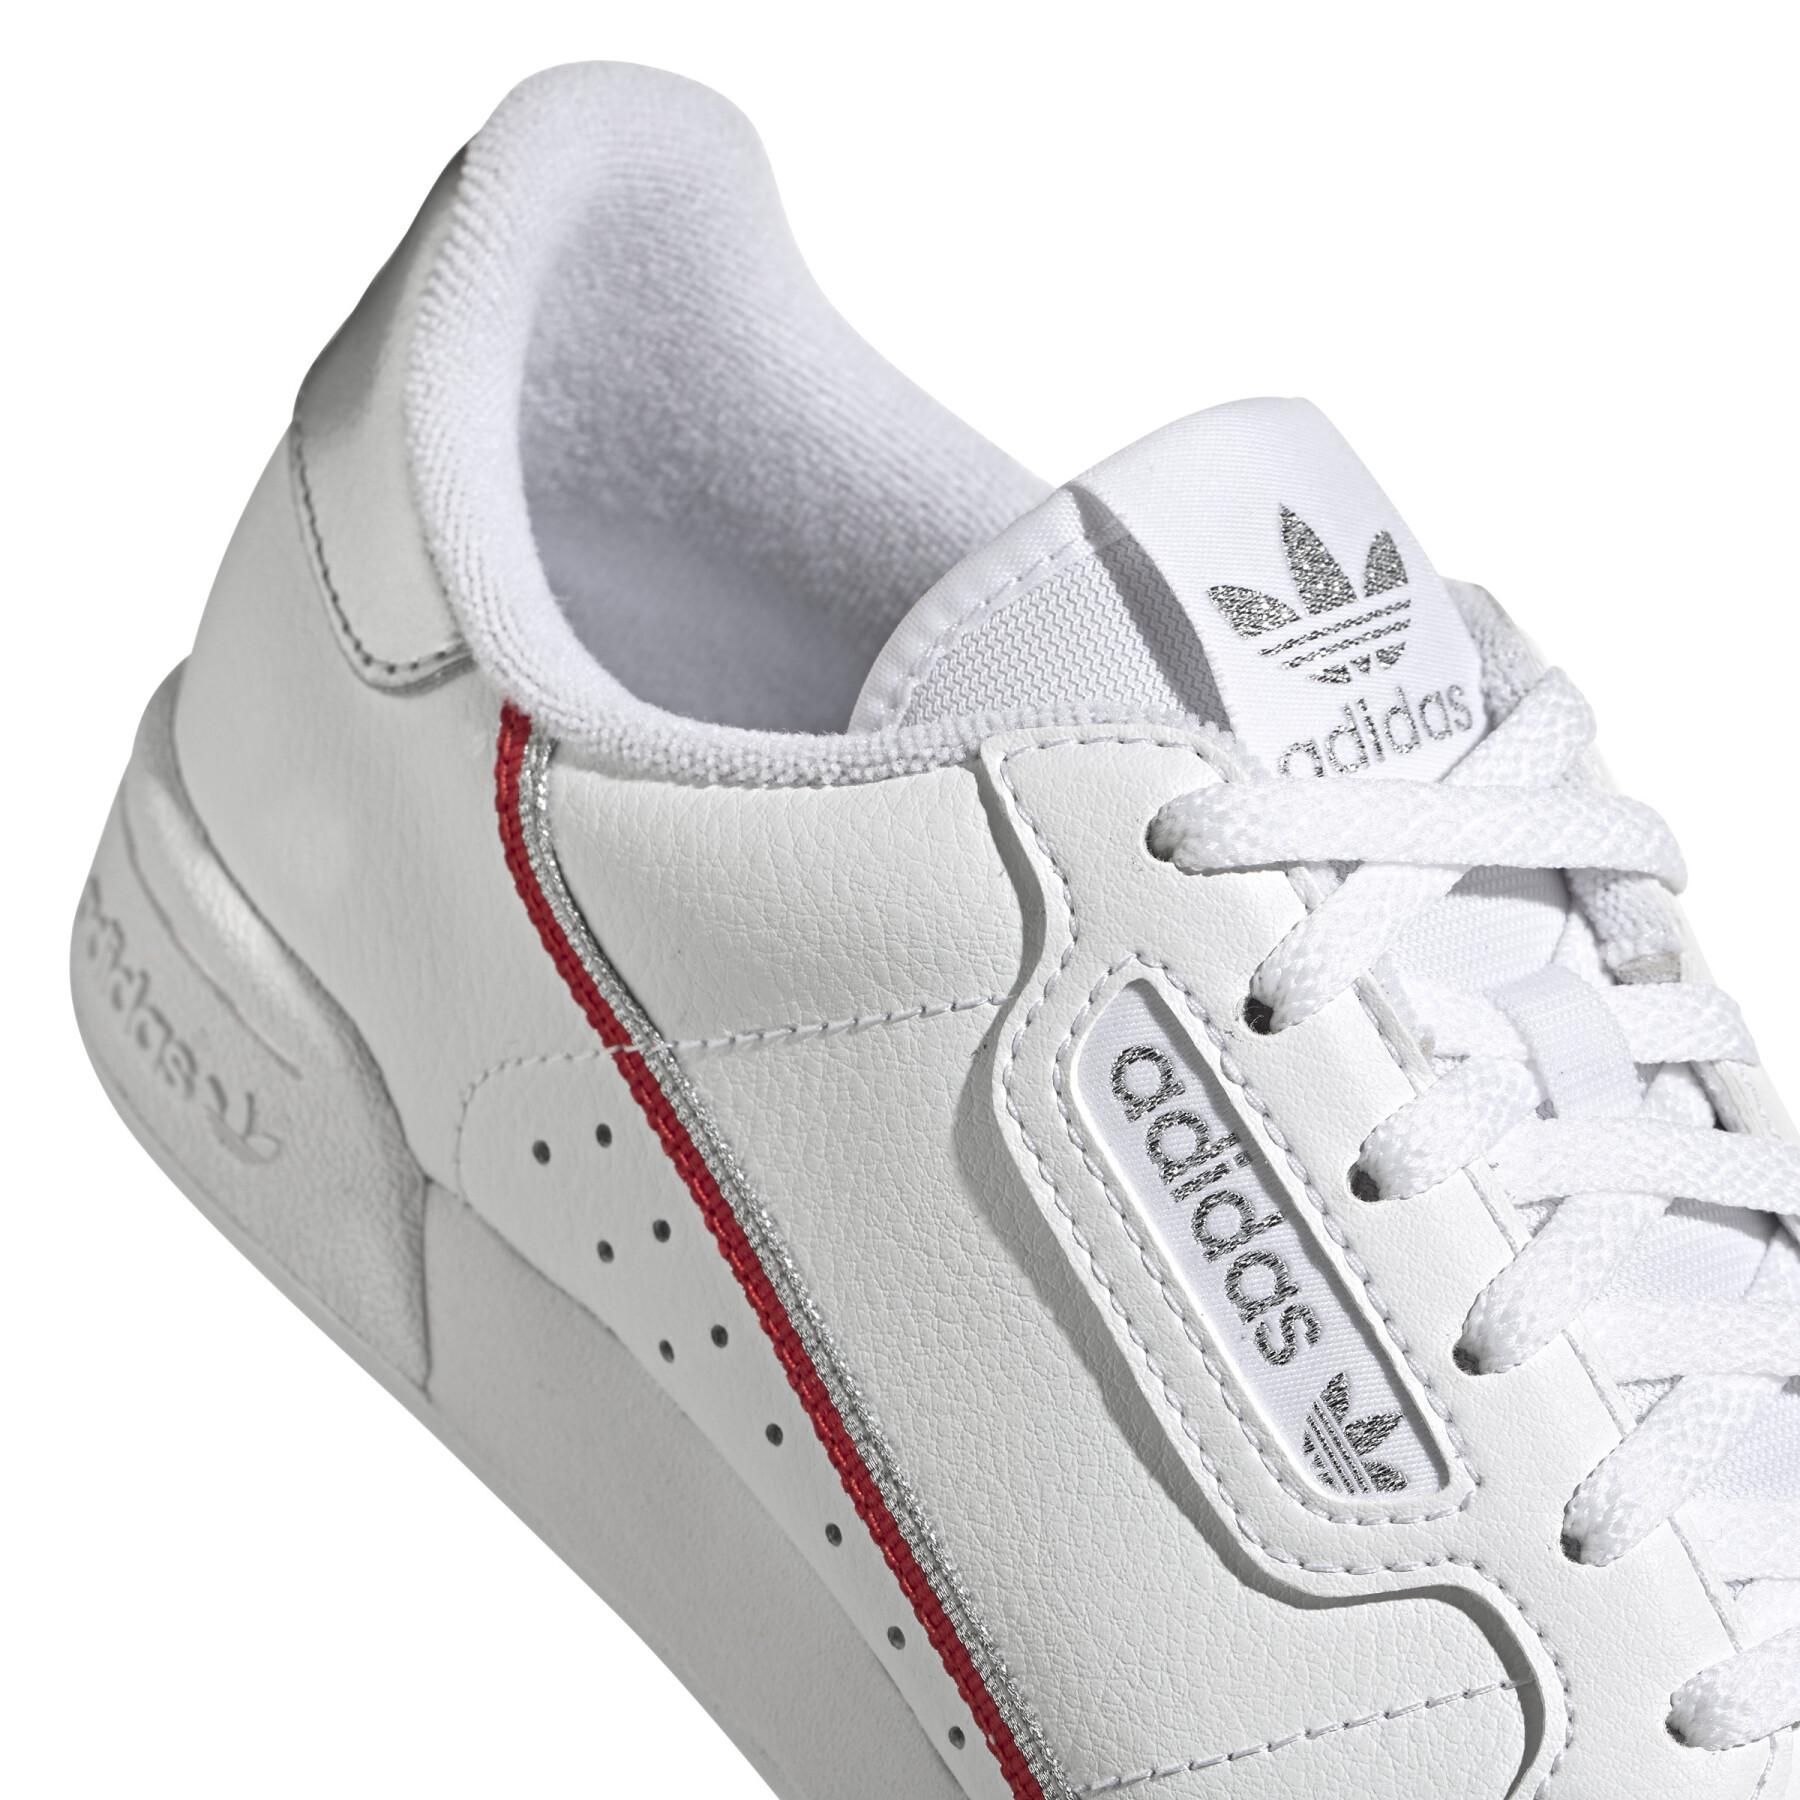 Girl sneakers adidas Originals Continental 80